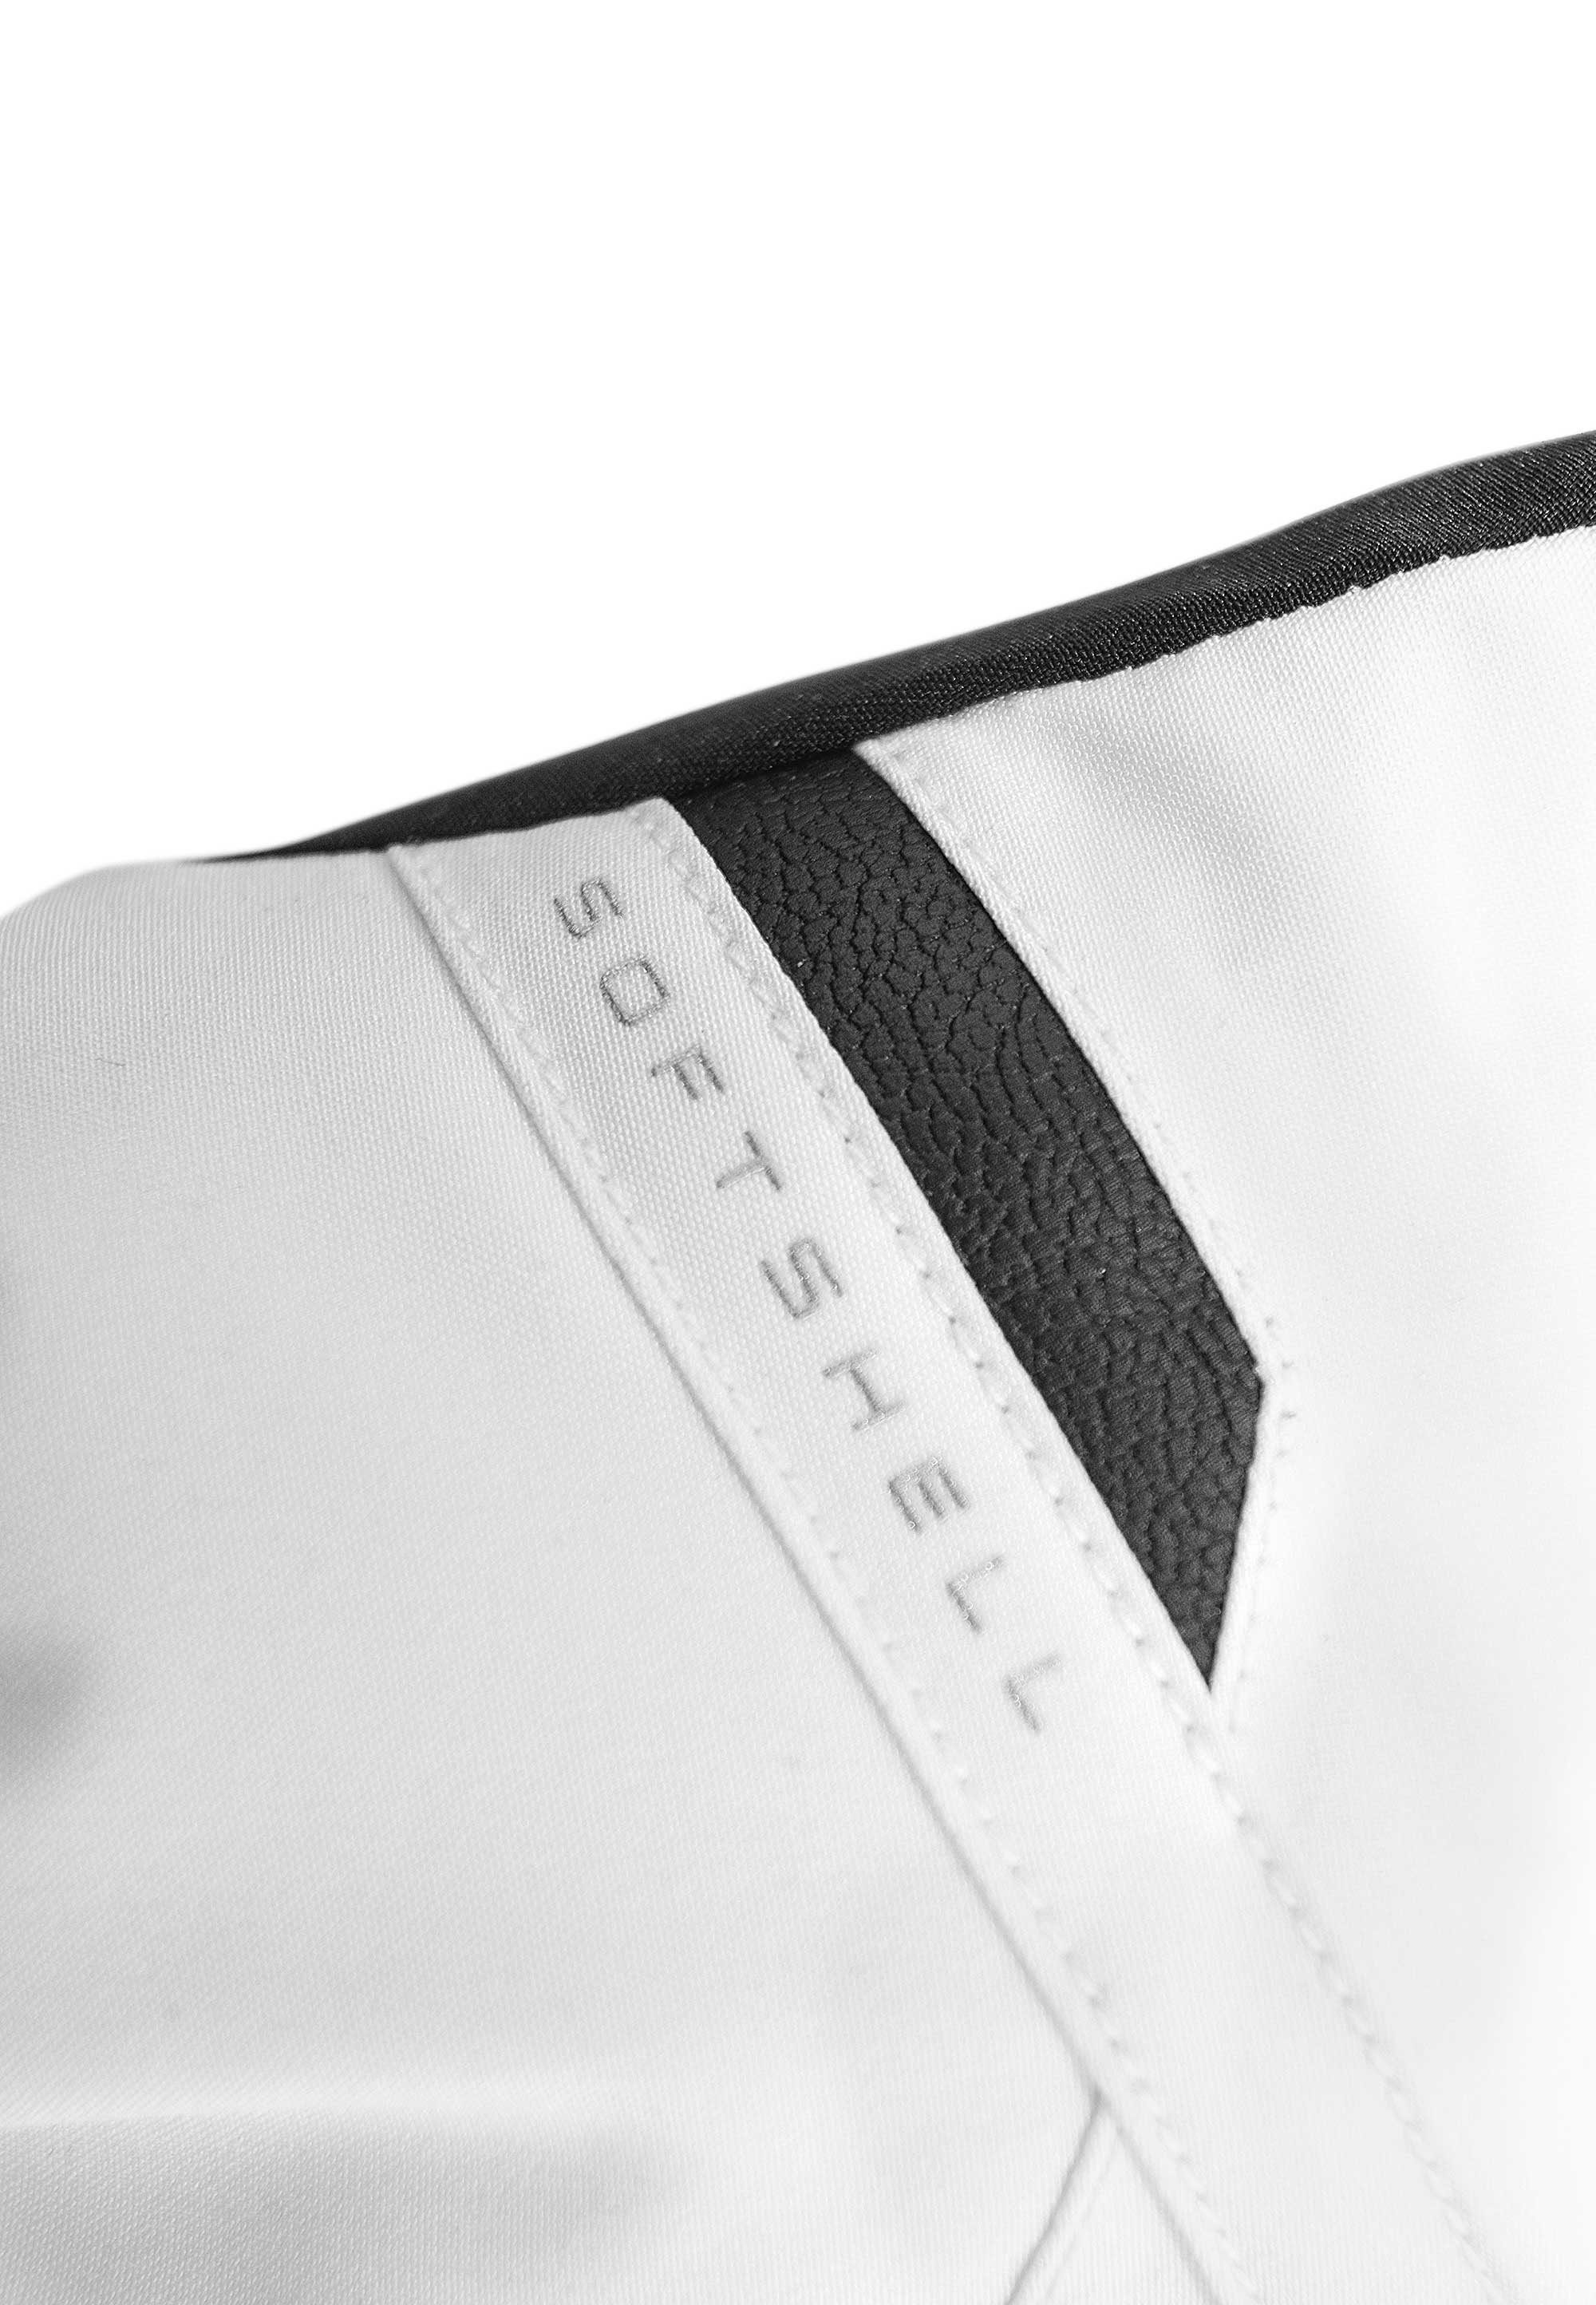 Helena R-TEX® Reusch wasserdichter atmungsaktiver und weiß-schwarz XT Ausführung extrawarmer, Skihandschuhe in